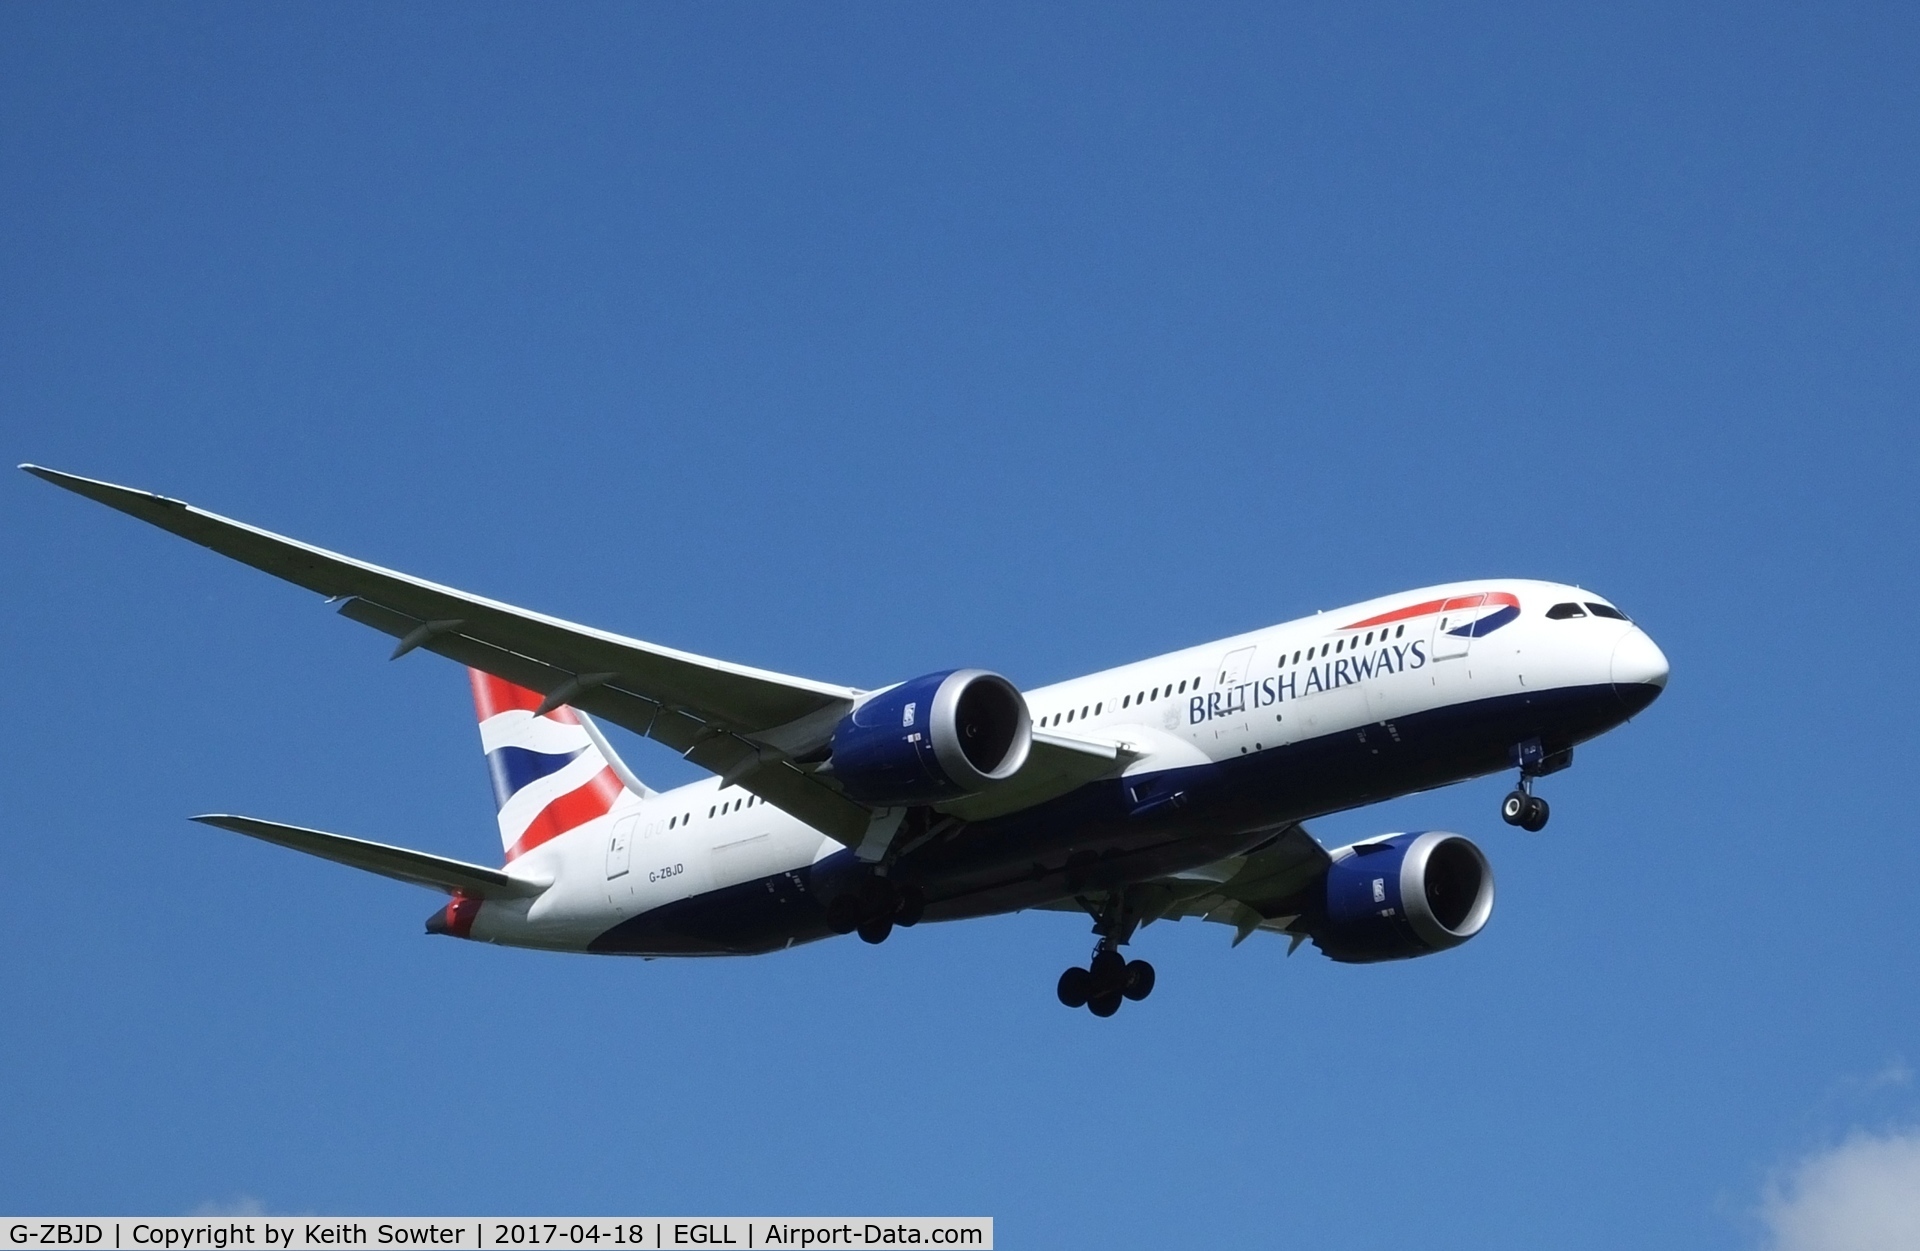 G-ZBJD, 2013 Boeing 787-8 Dreamliner C/N 38619, Short finals to land on runway 09L at Heathrow